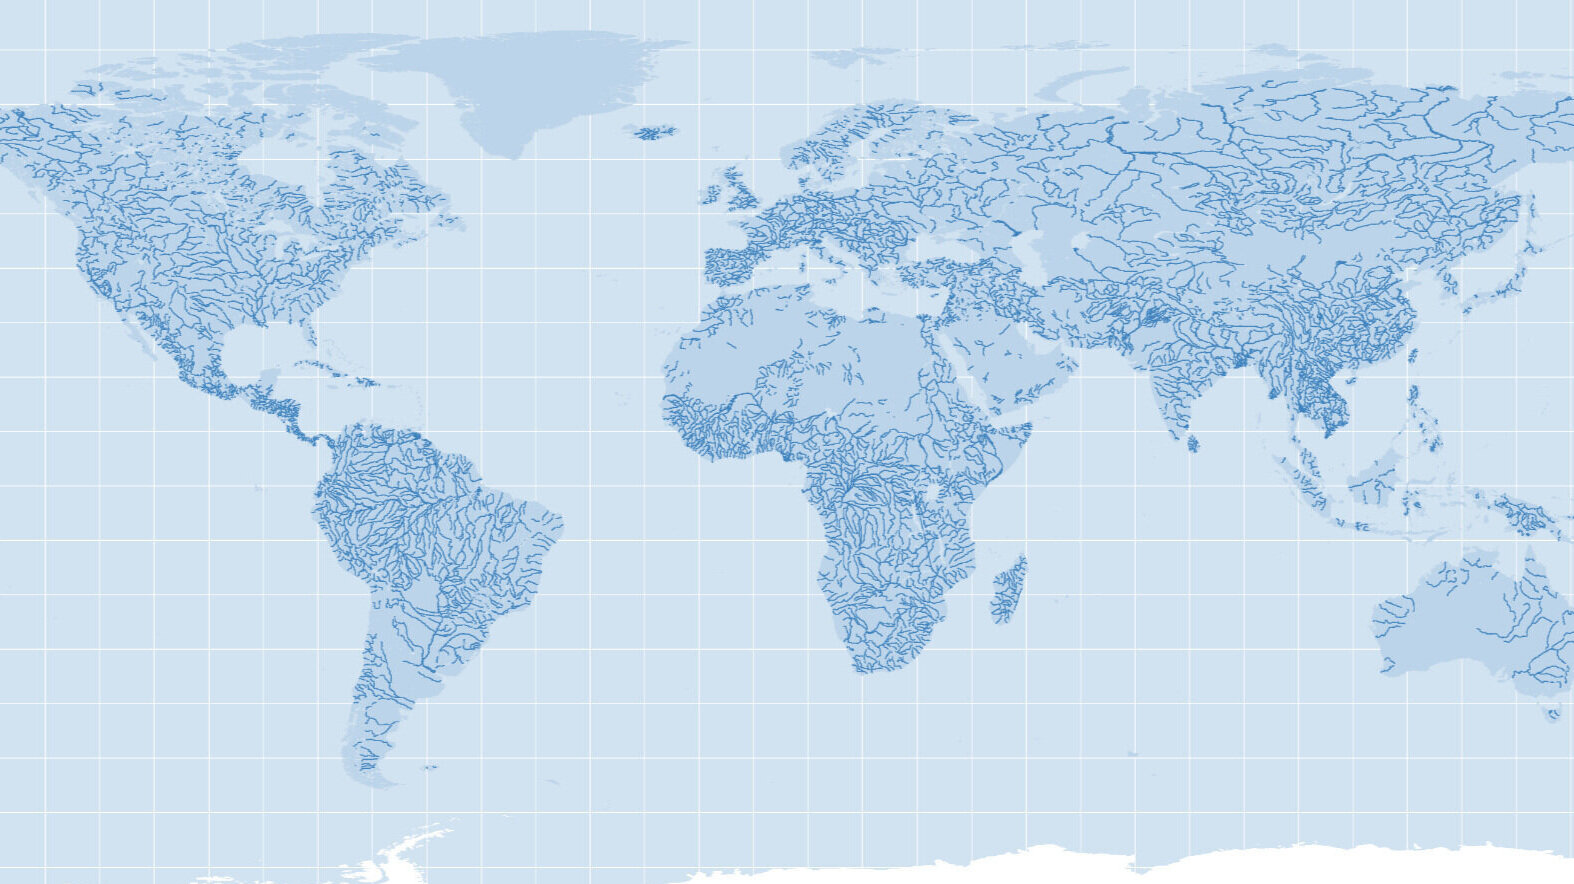 Карта мира реки